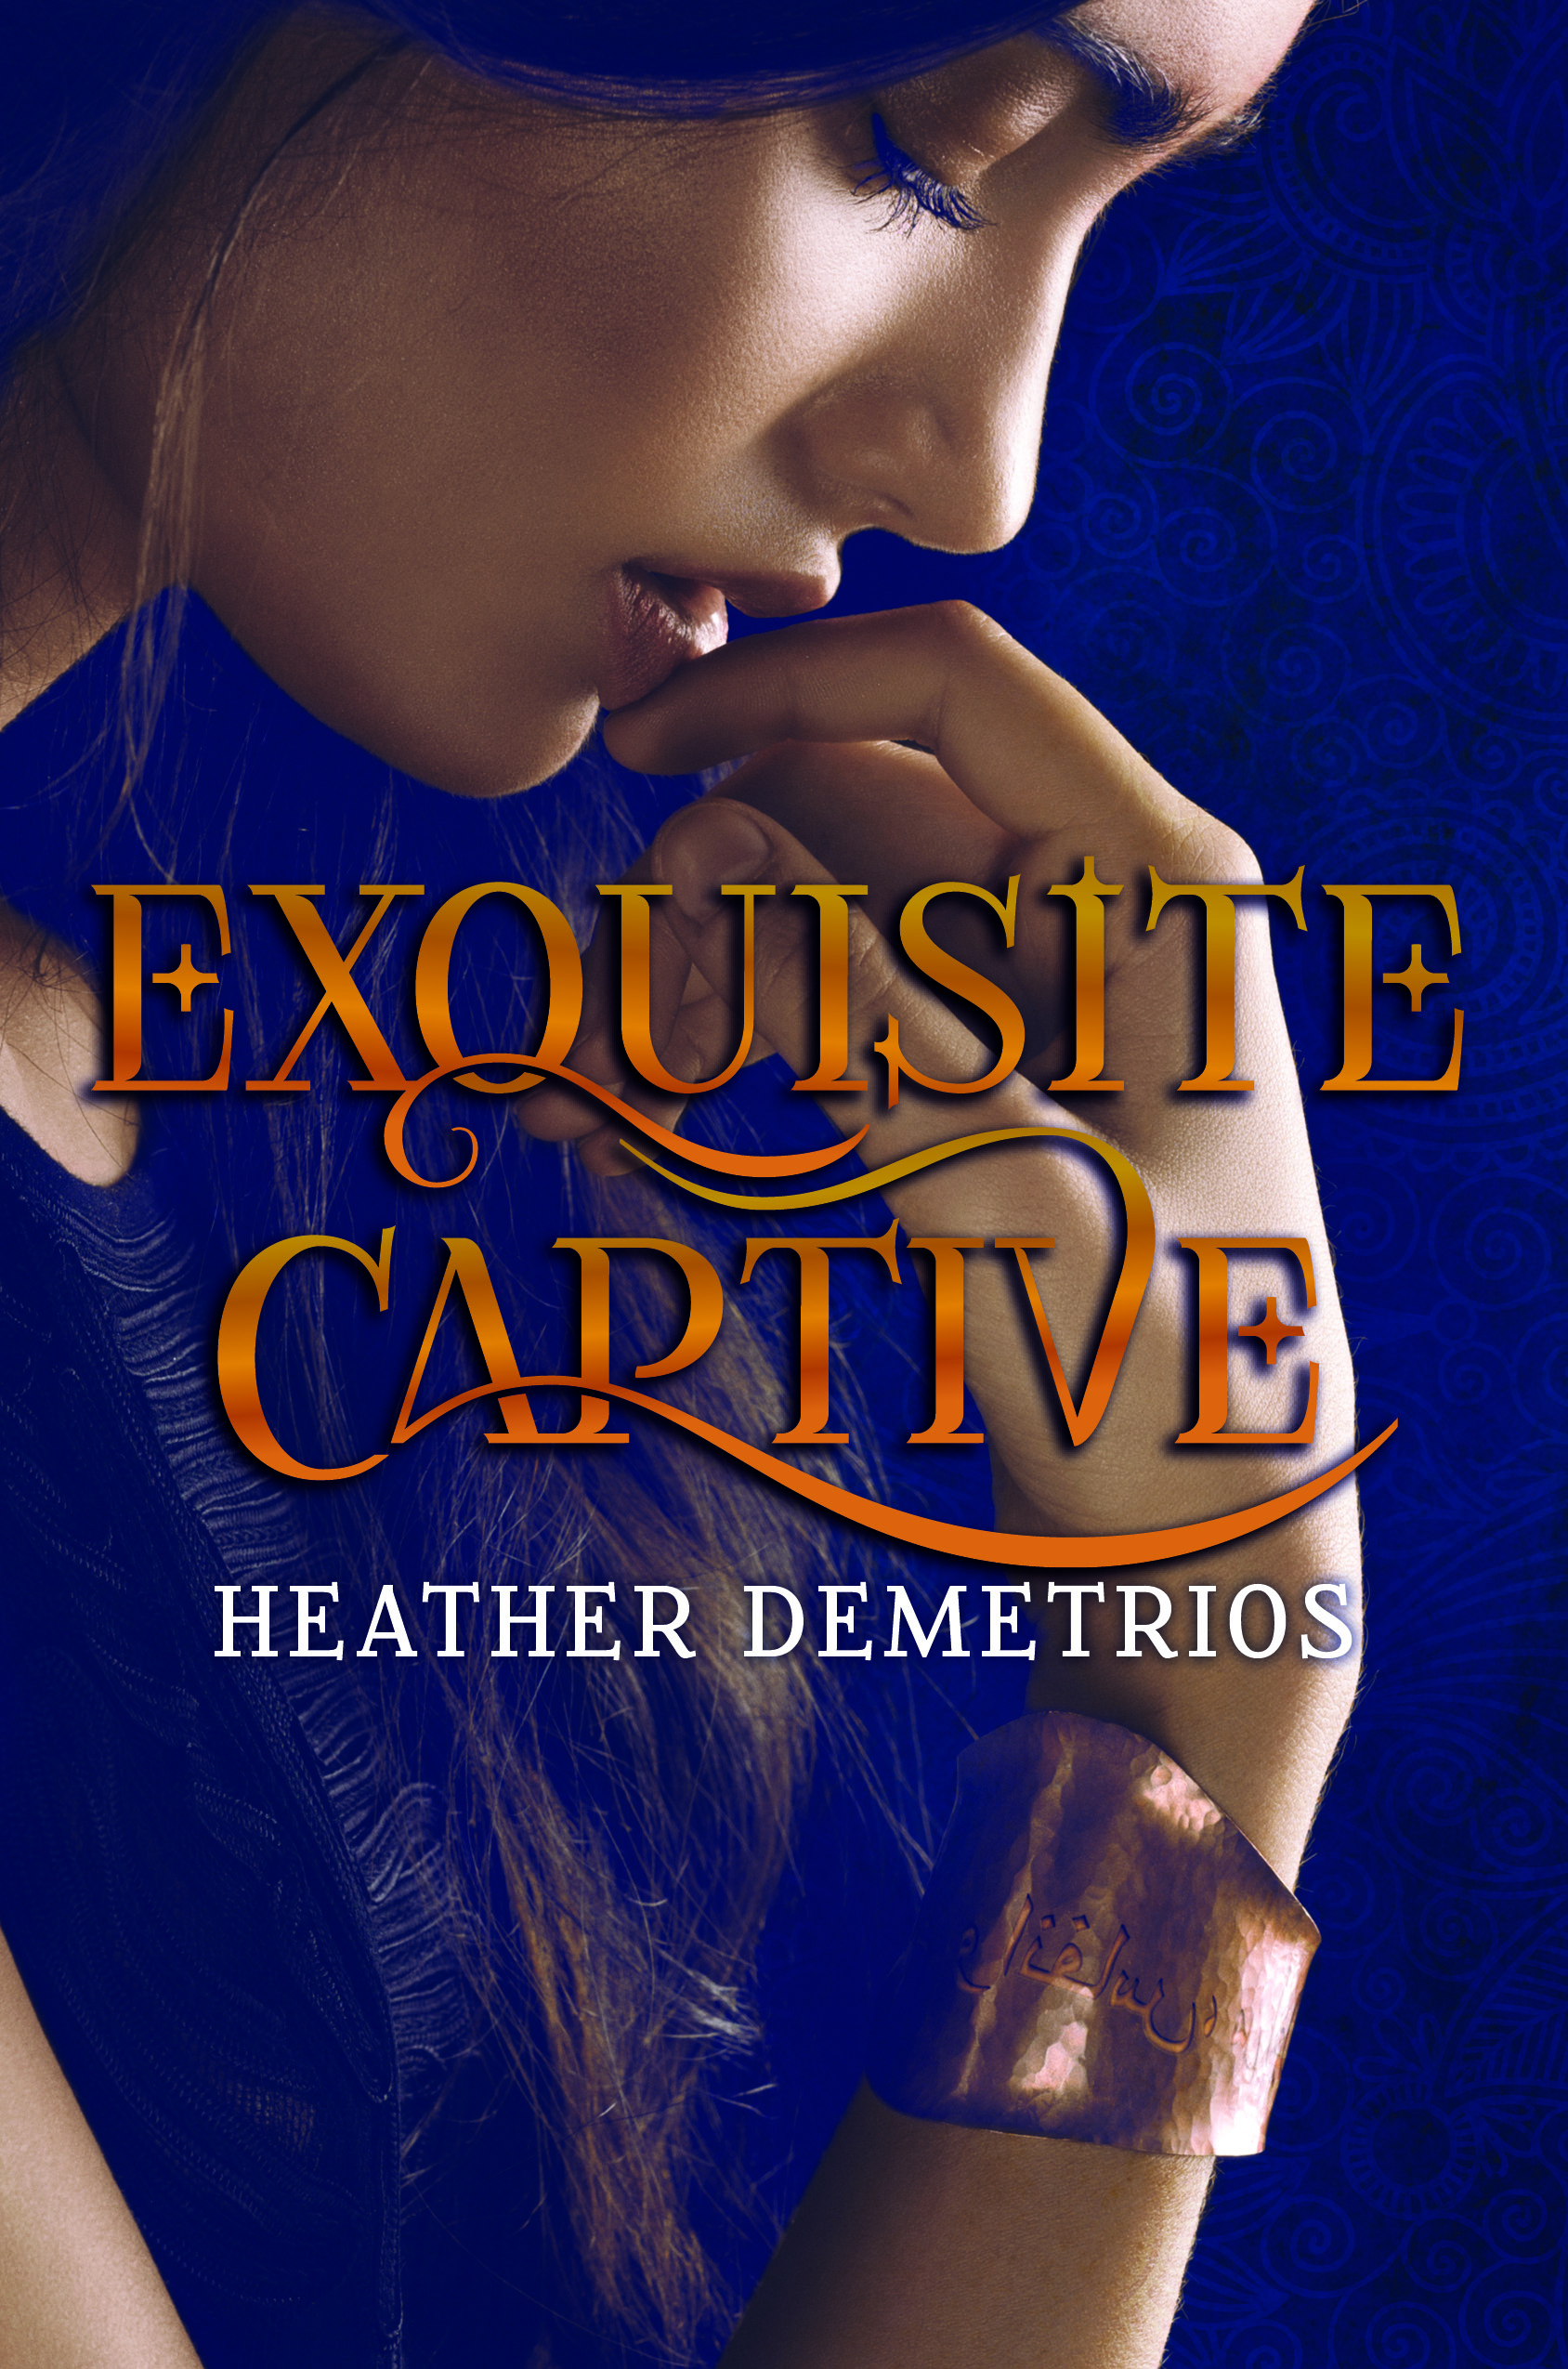 Heather_Demetrios__Exquisite_Captive.jpe